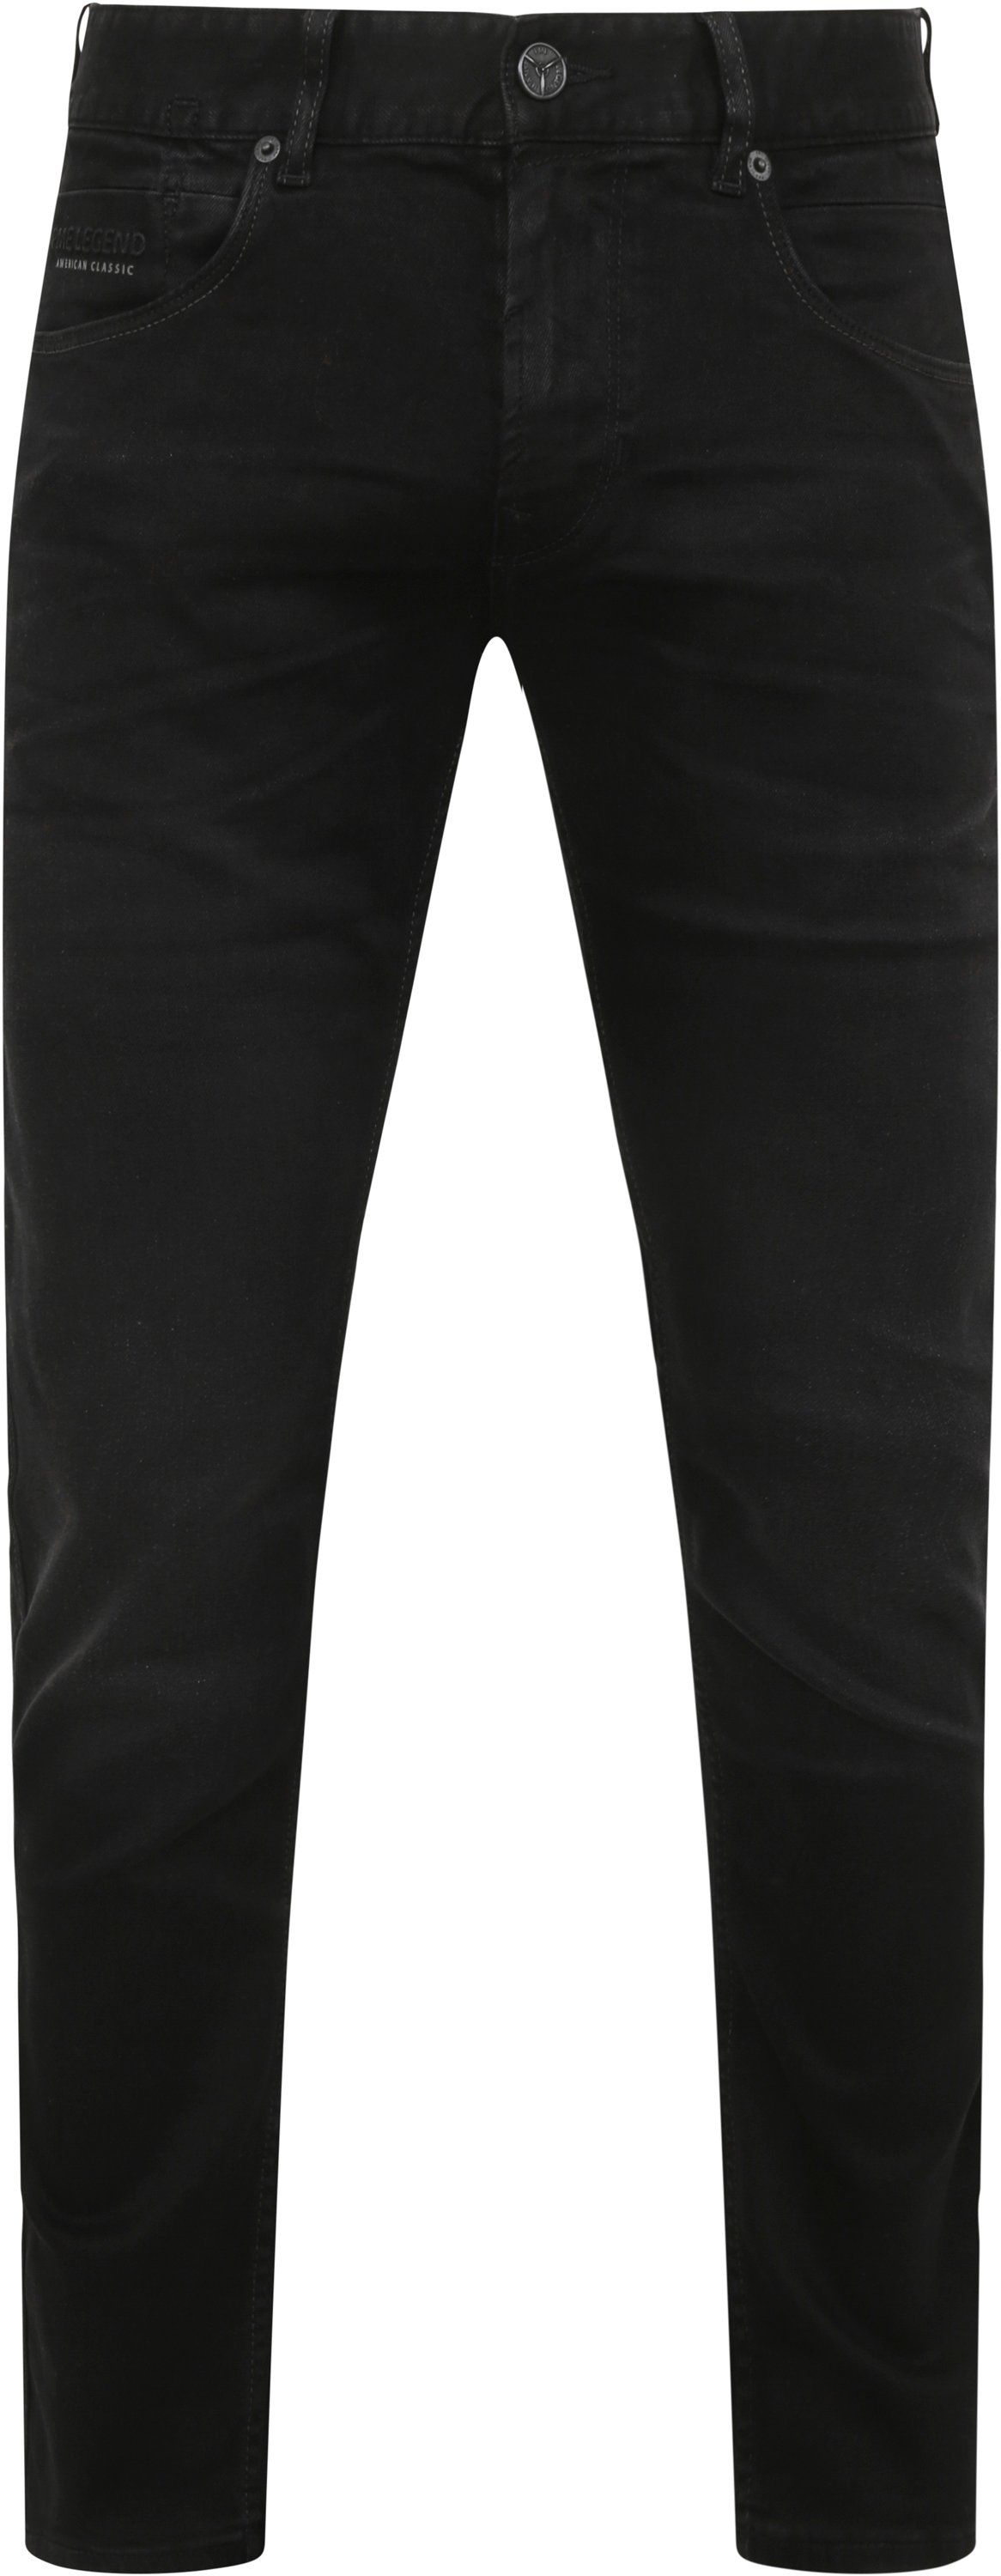 PME Legend Nightflight Jeans Black size W 33